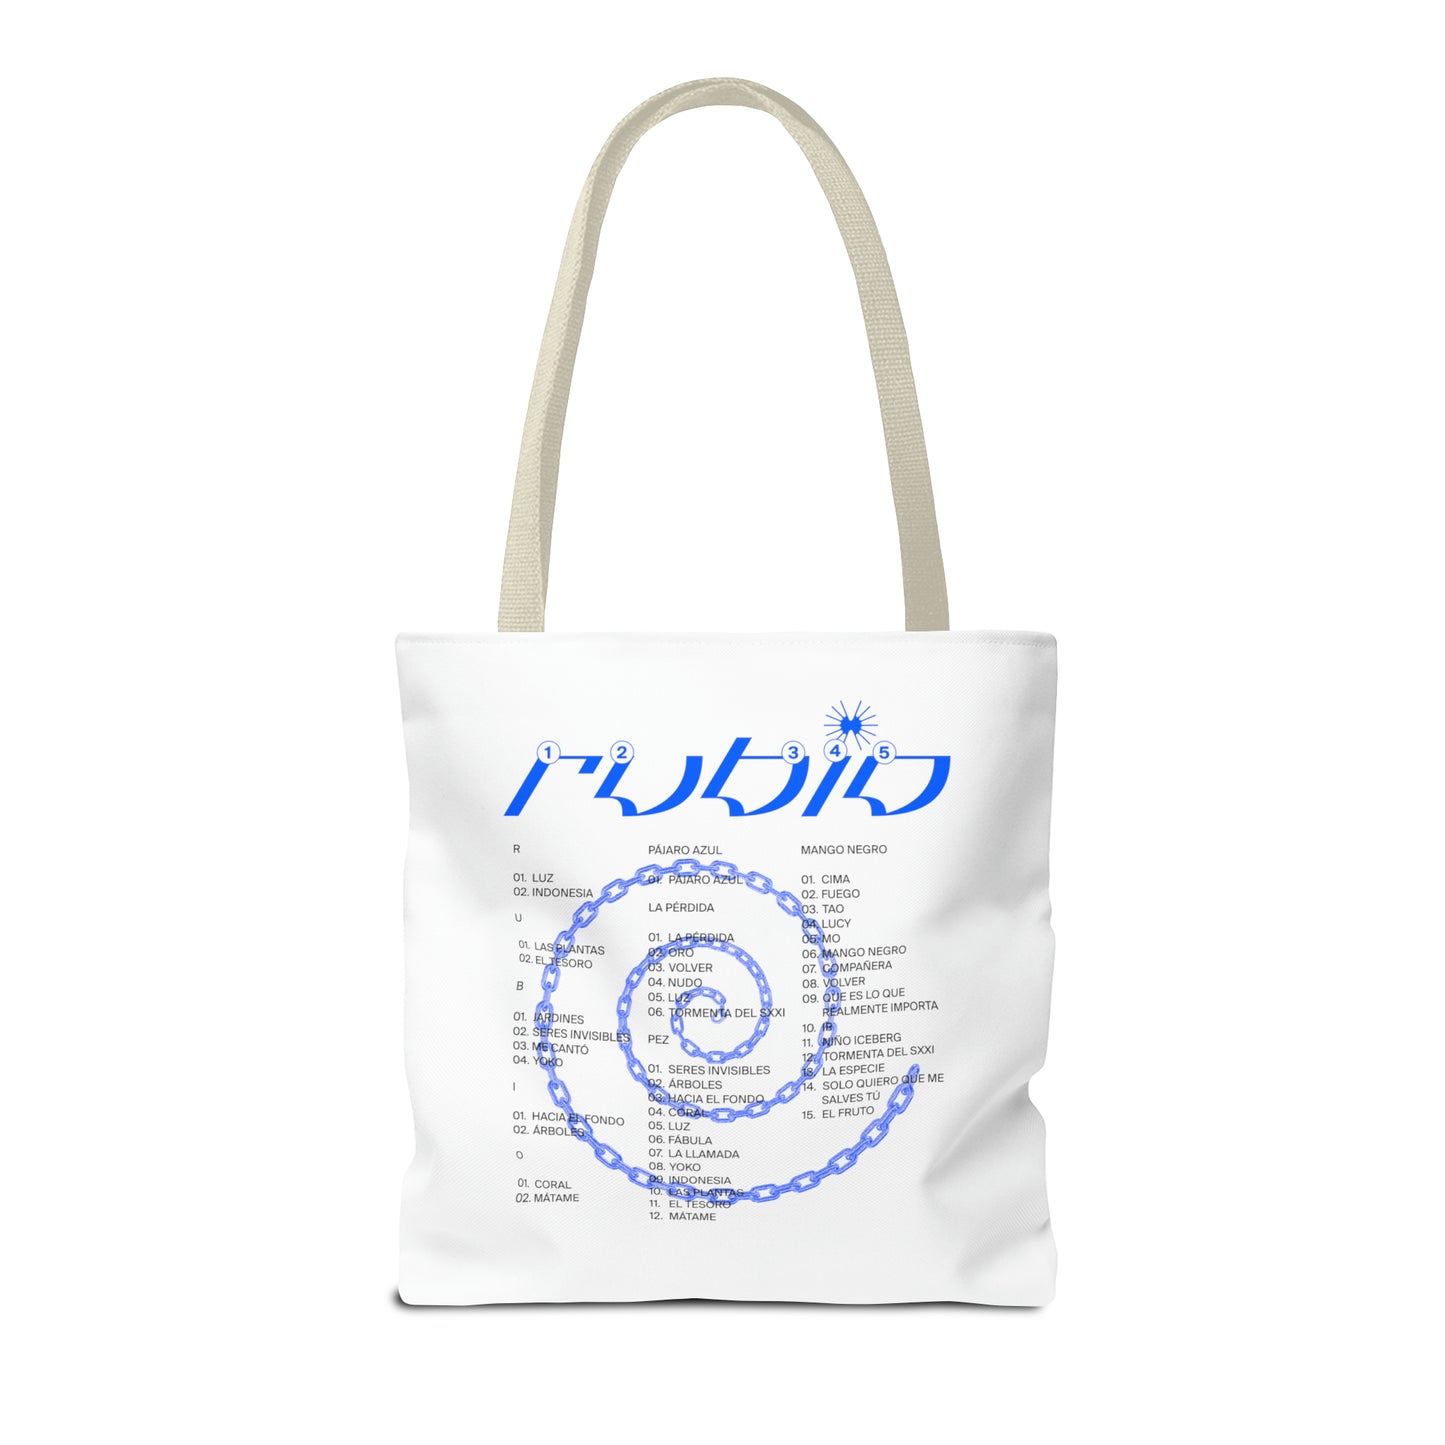 RUBIO's Albums & Tracks White Tote Bag